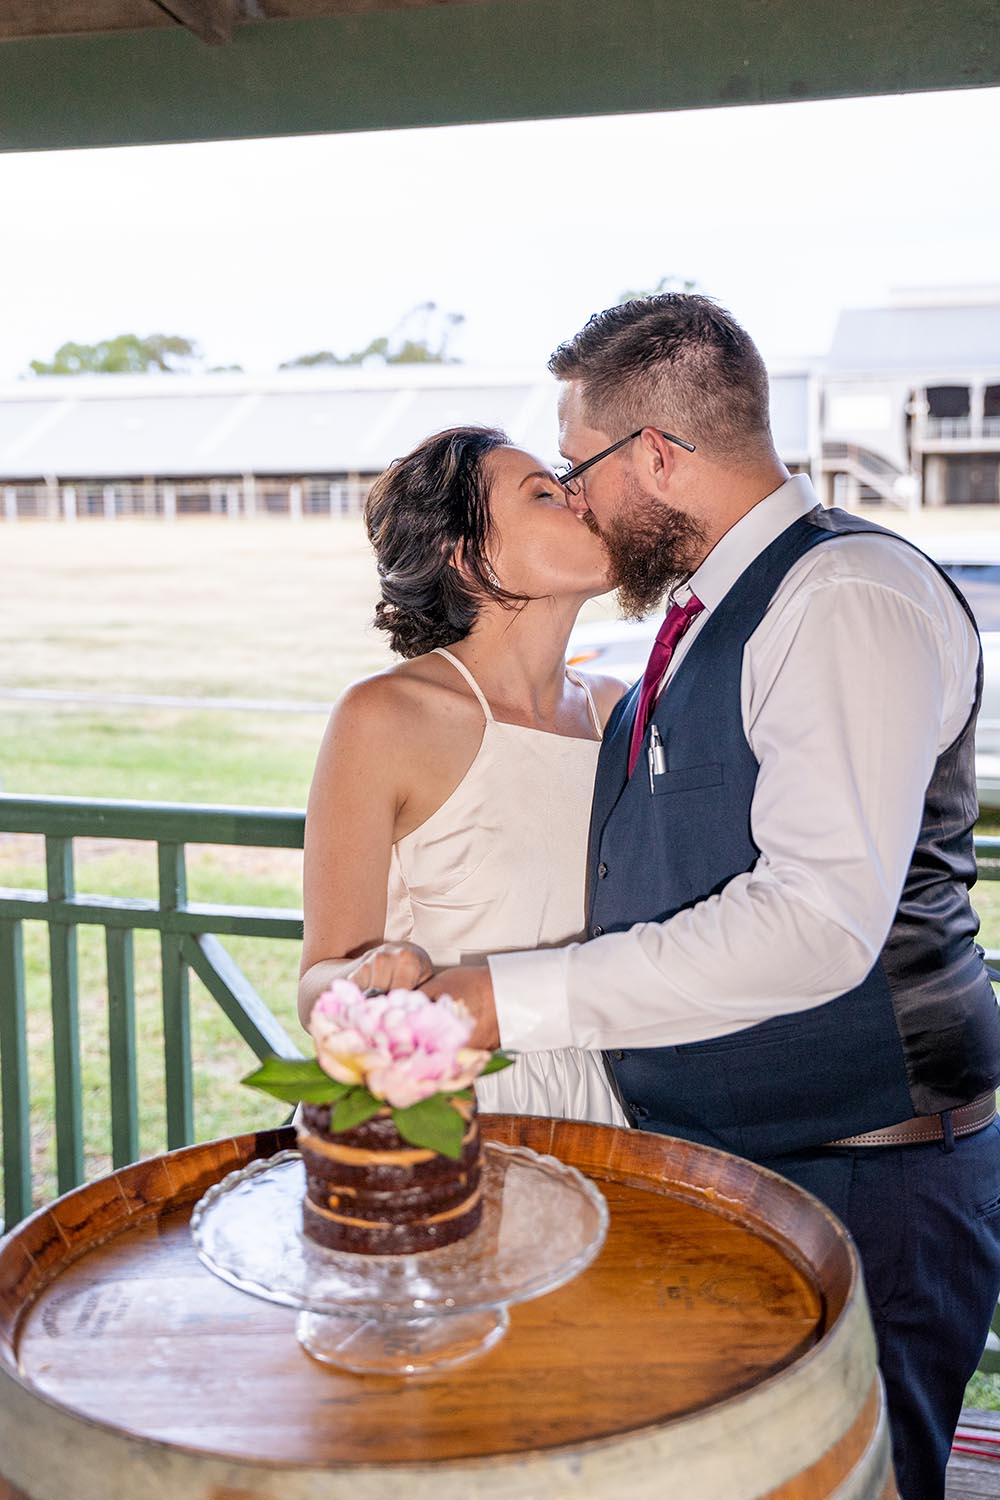 Wedding Photography - cutting the cake